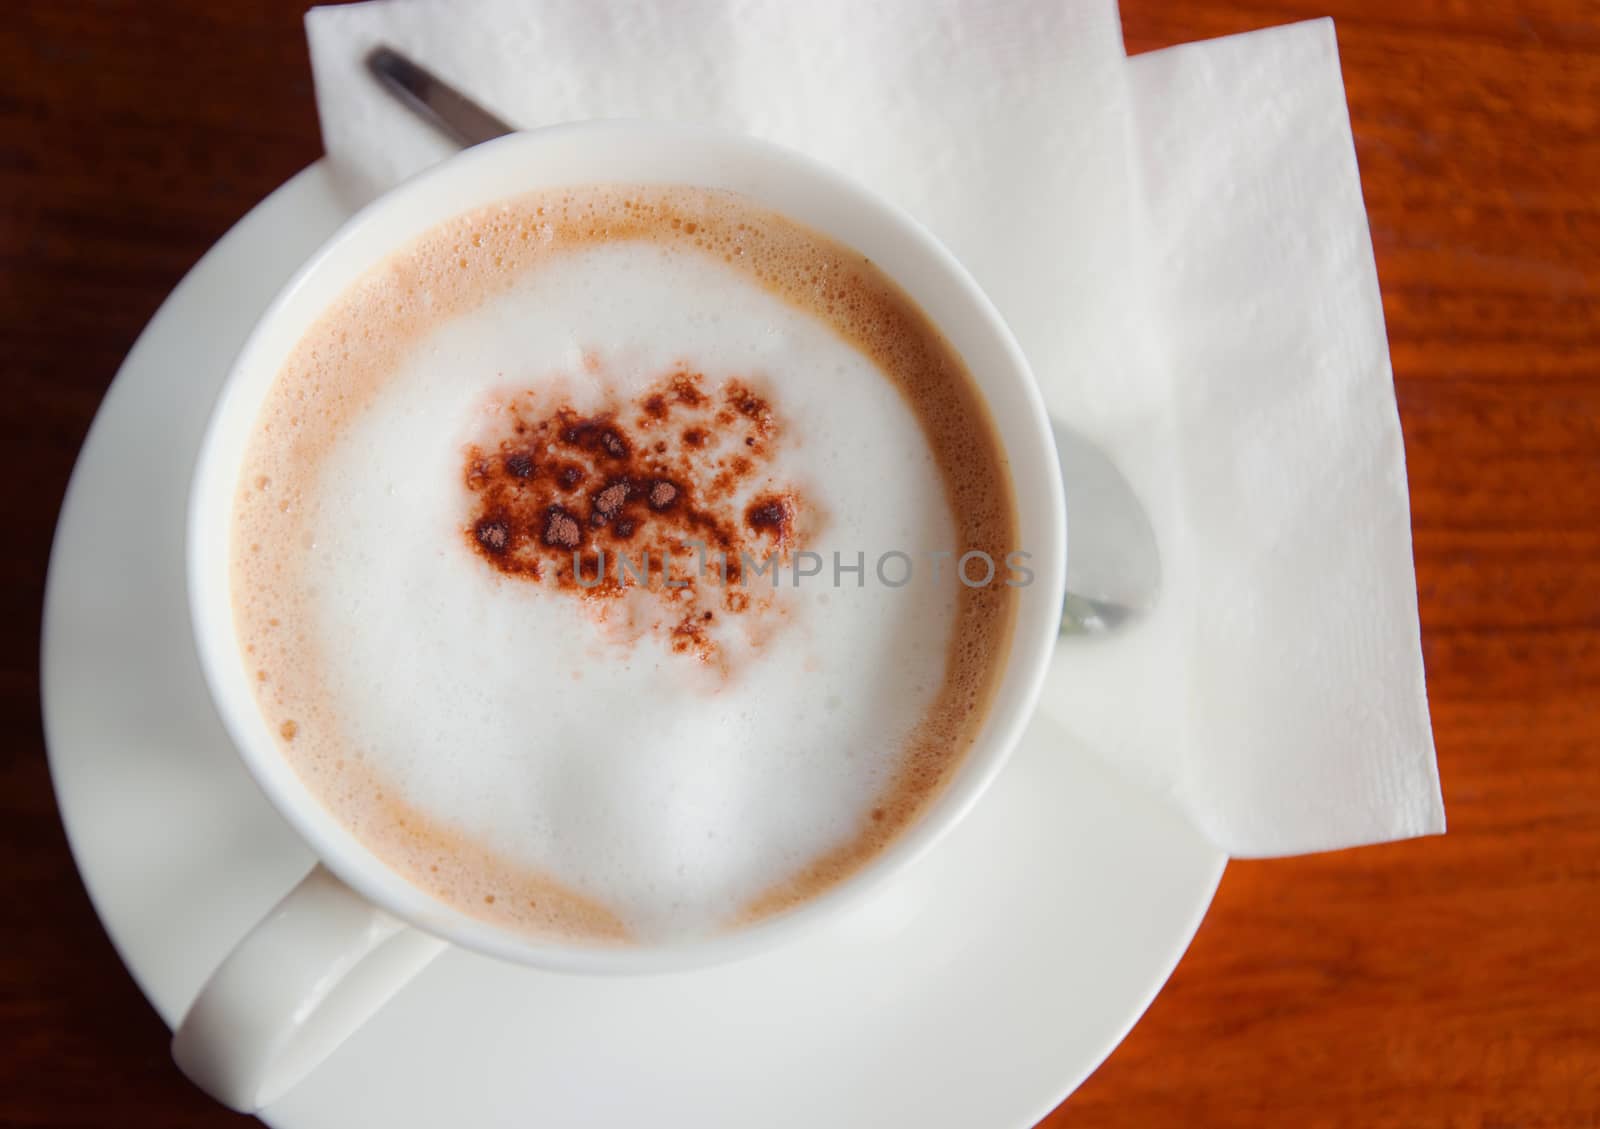  Coffee Cappuccino, Cup Of Coffee by jimbophoto